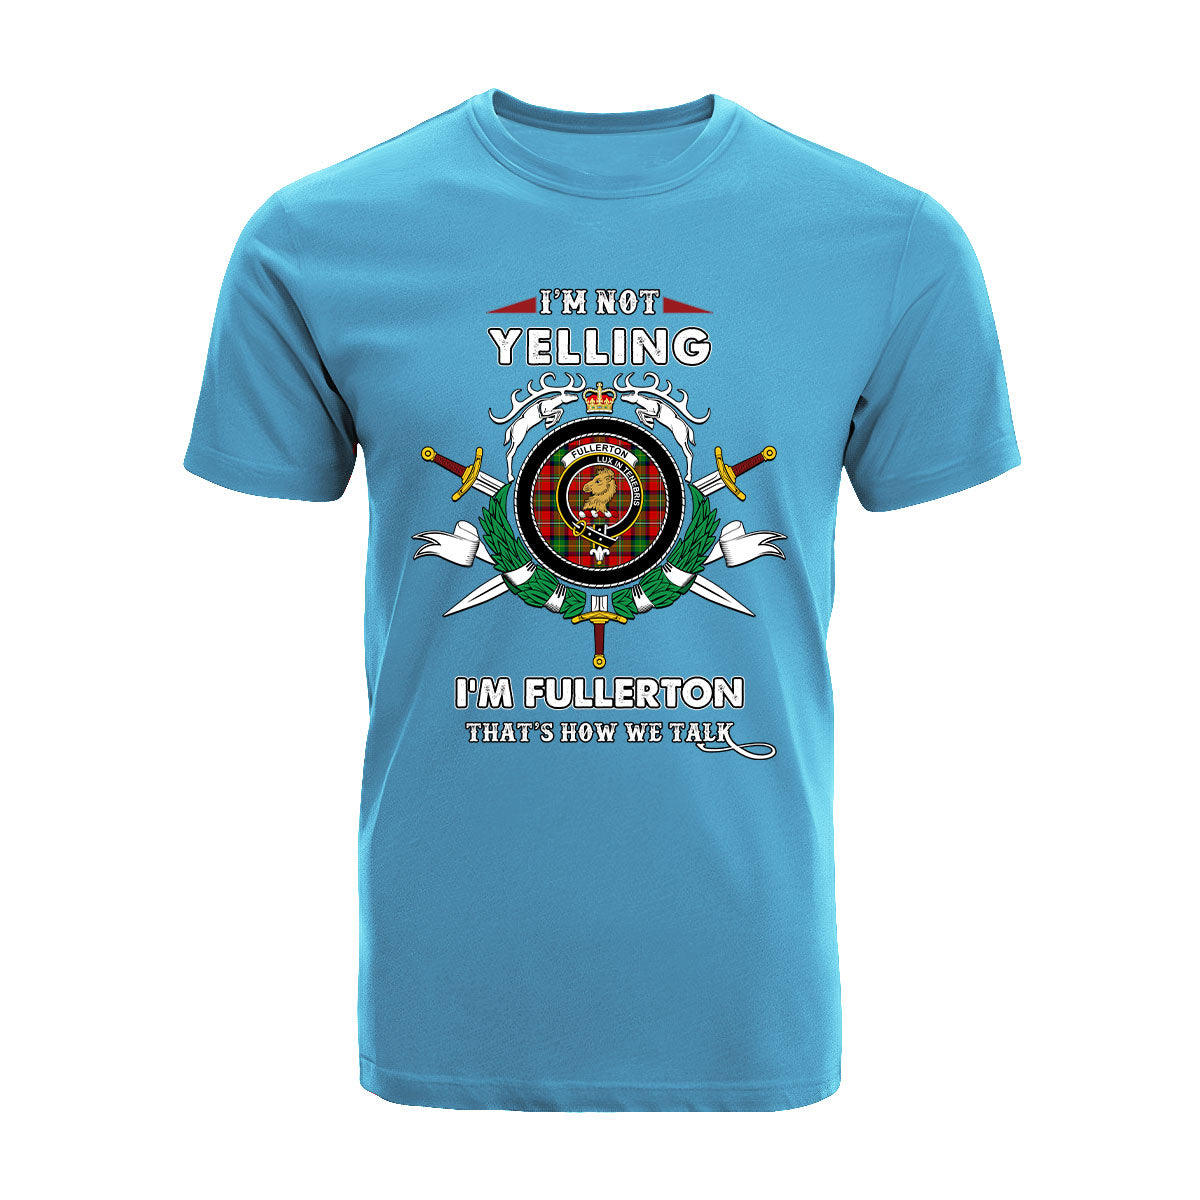 Fullerton Tartan Crest T-shirt - I'm not yelling style